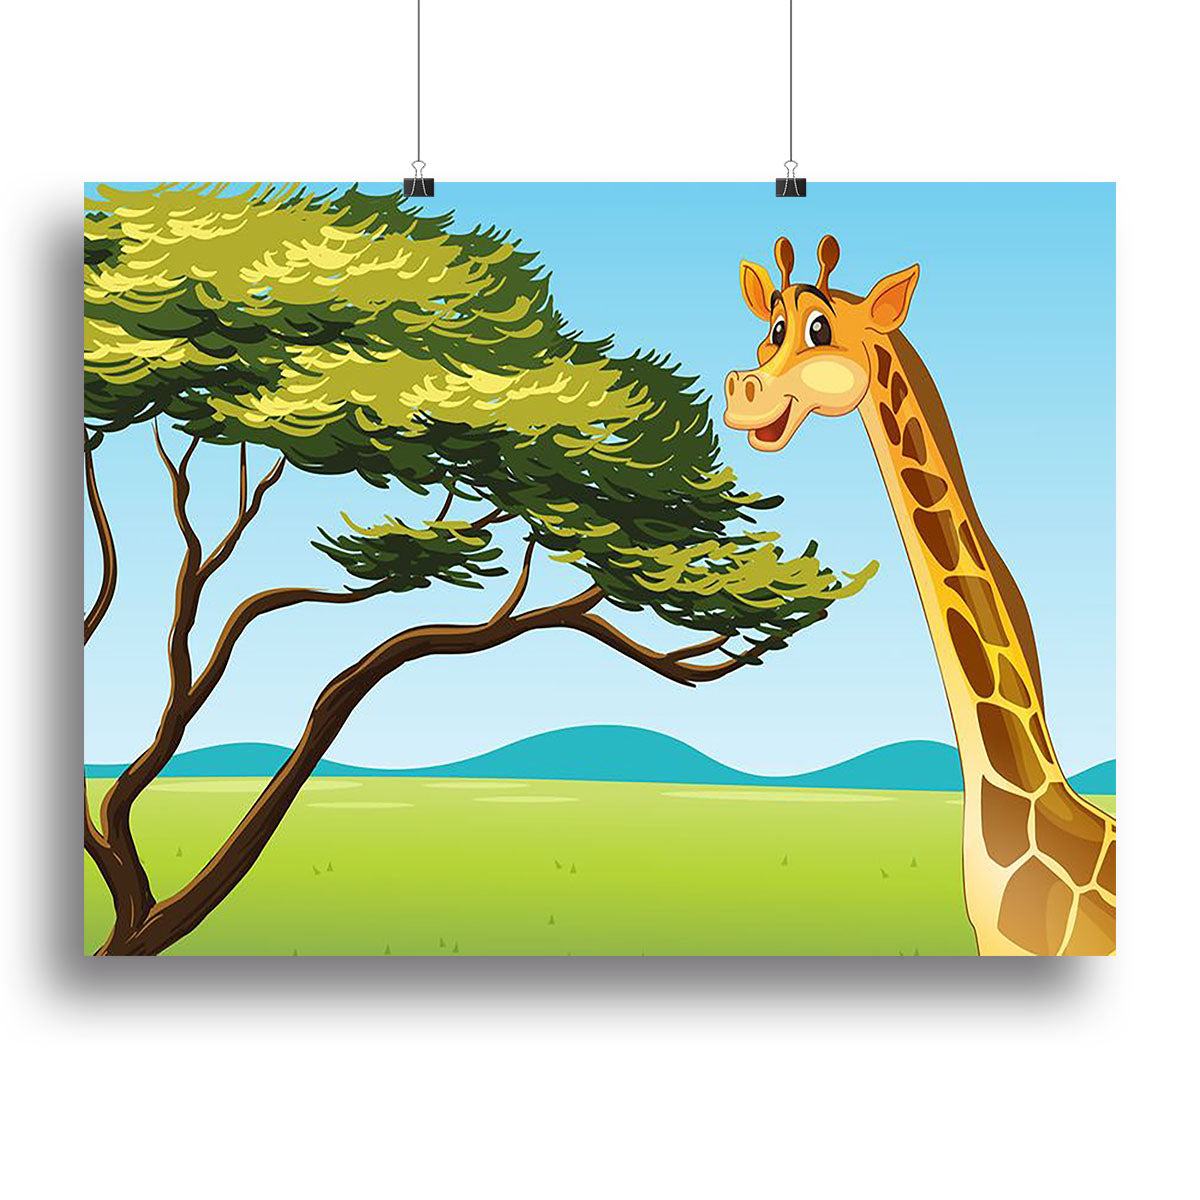 Illustration of a giraffe eating Canvas Print or Poster - Canvas Art Rocks - 2